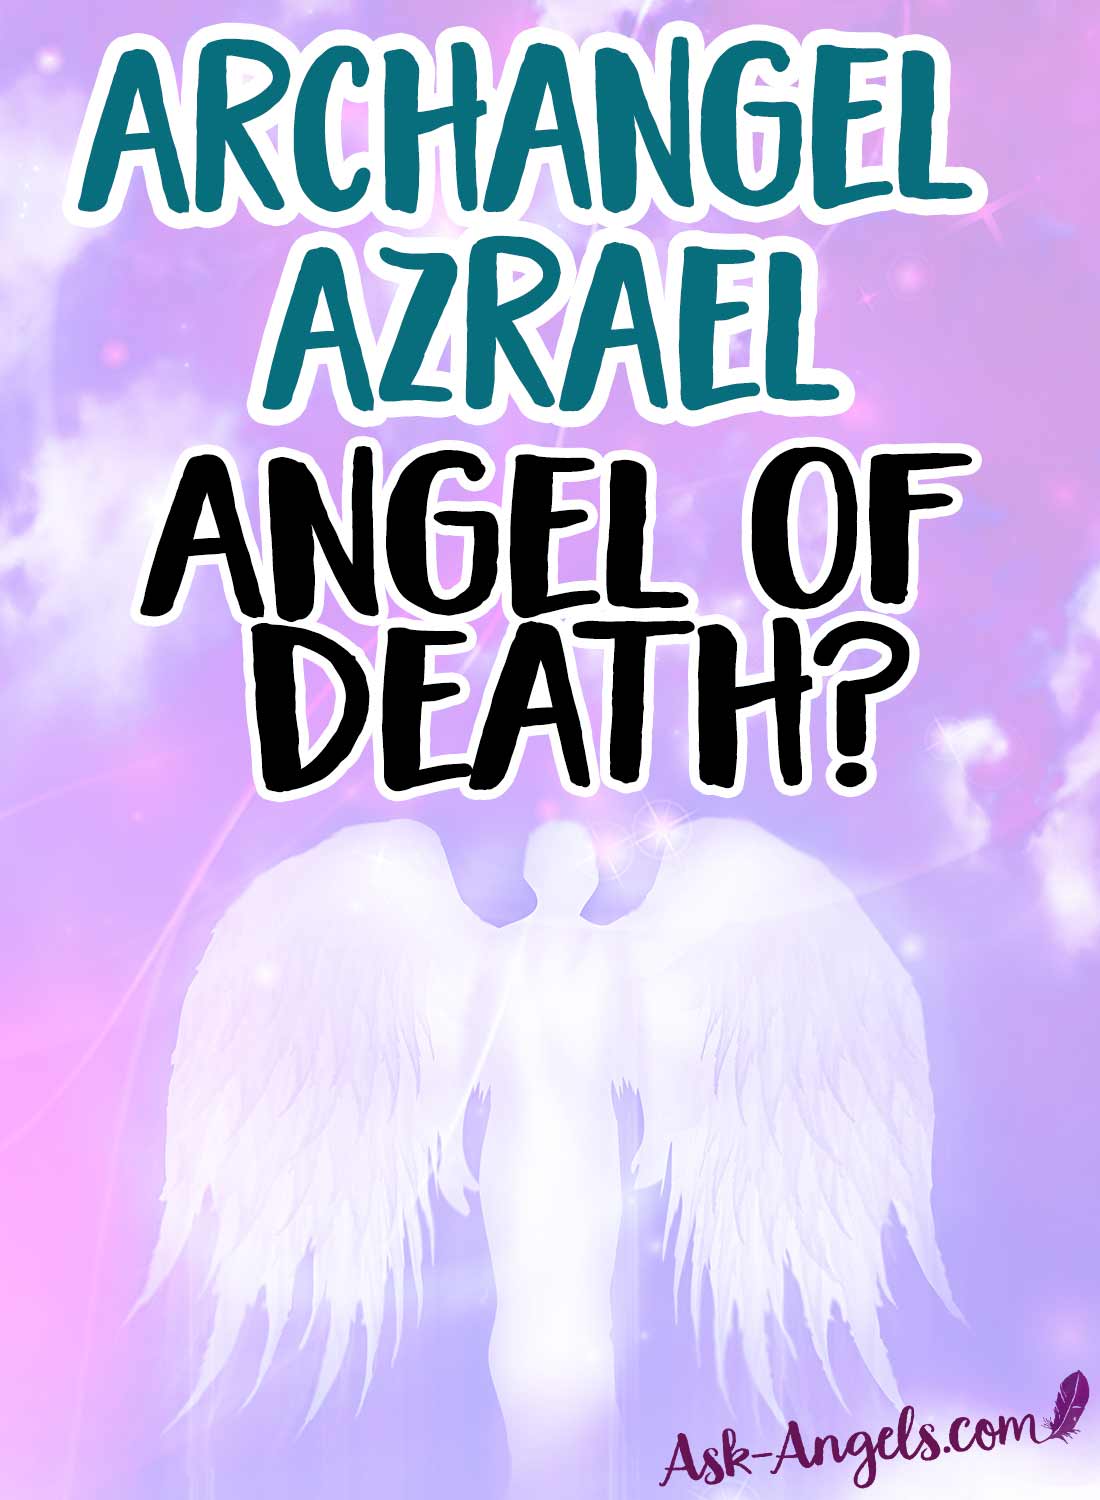 Archangel Azrael - The Angel of Death?